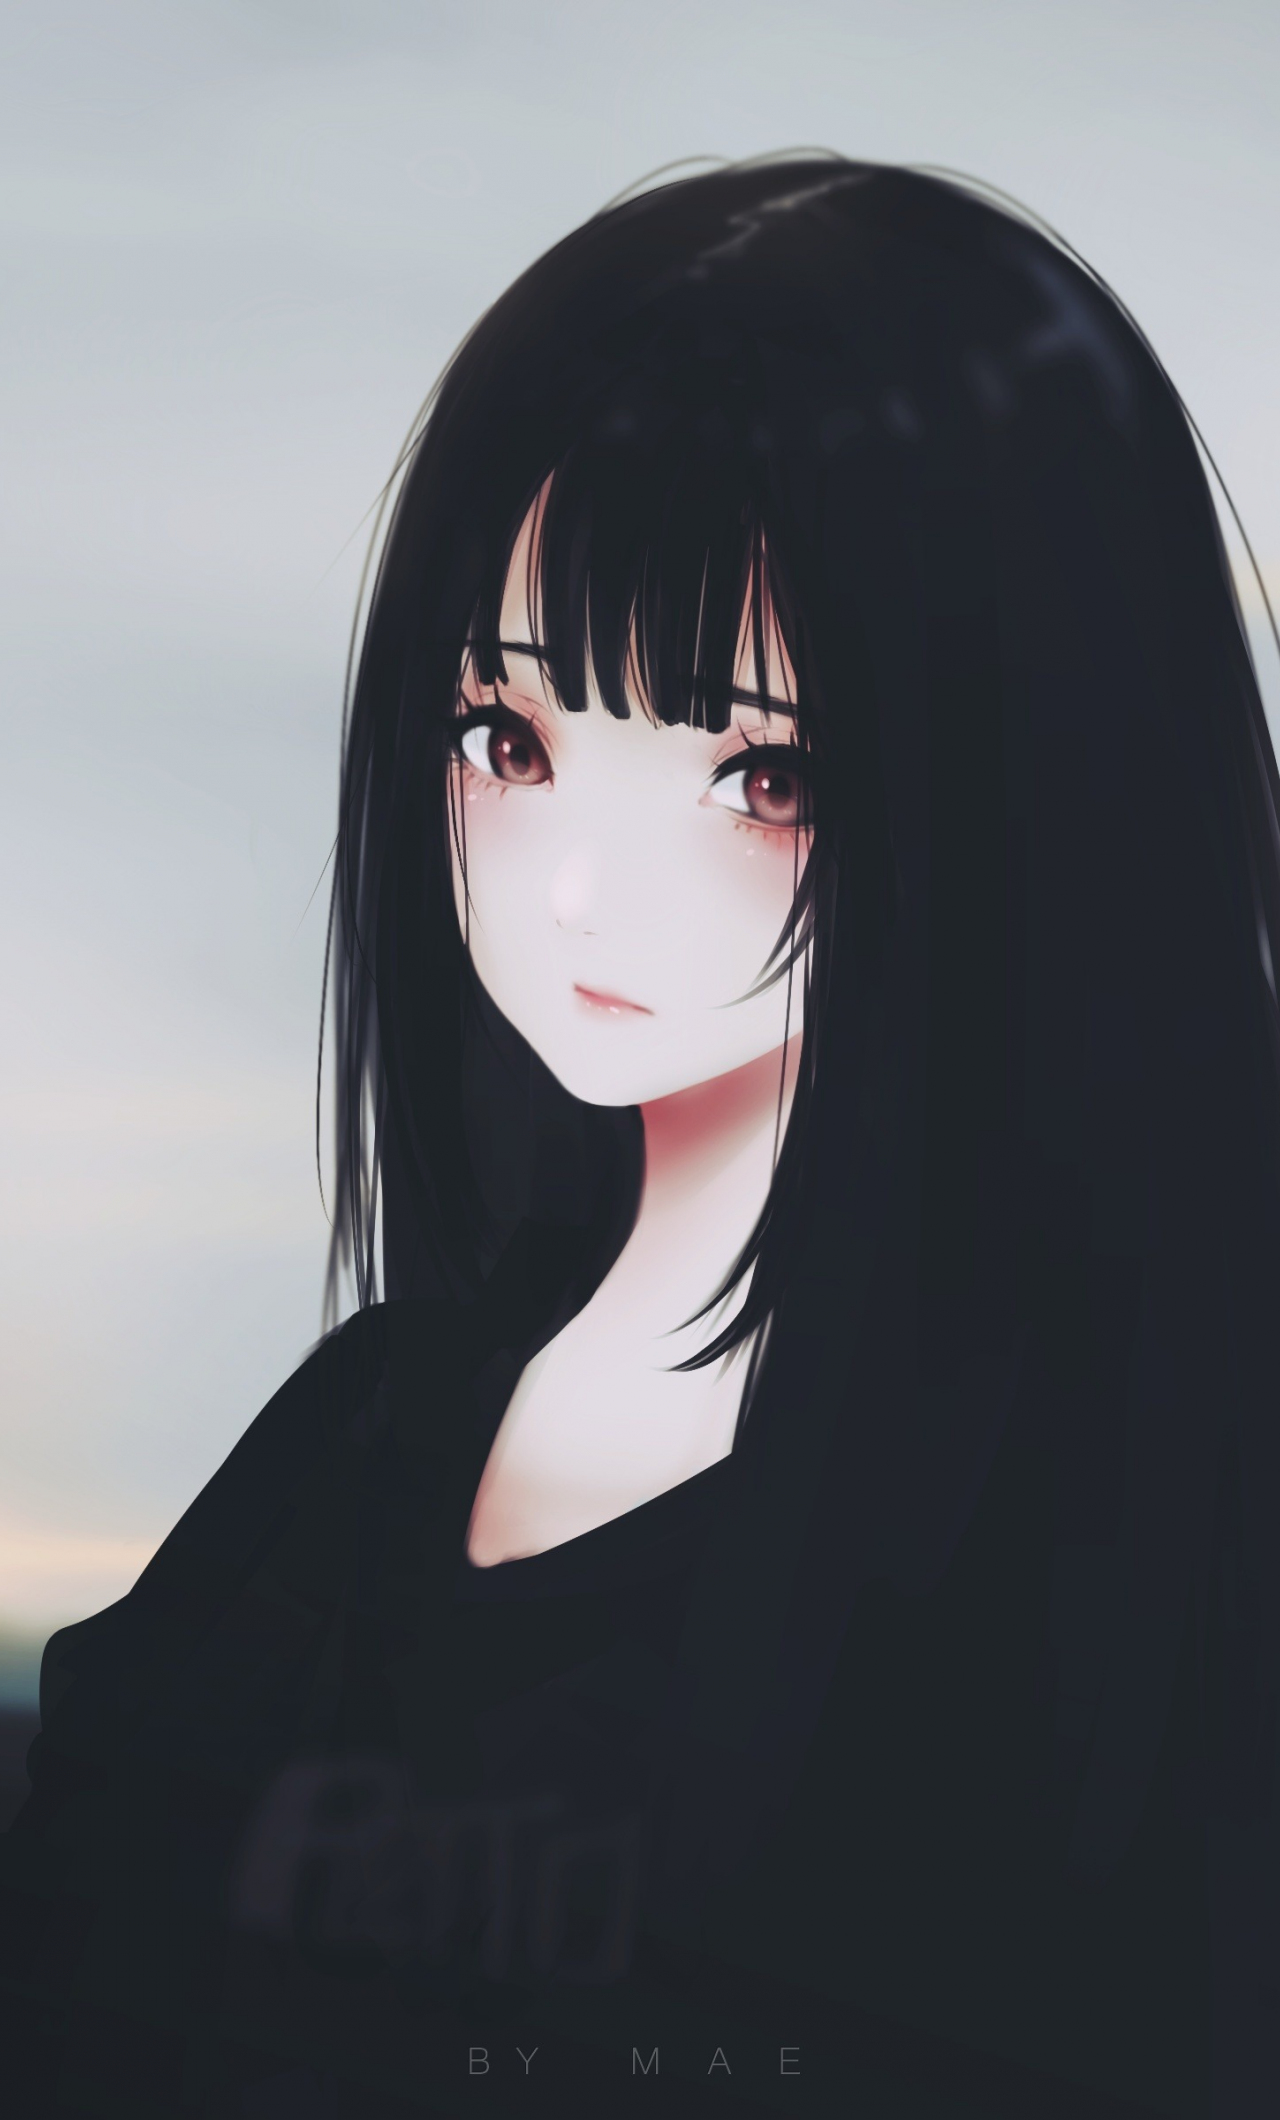 Cute anime girl in a hoodie illustration wall art - TenStickers